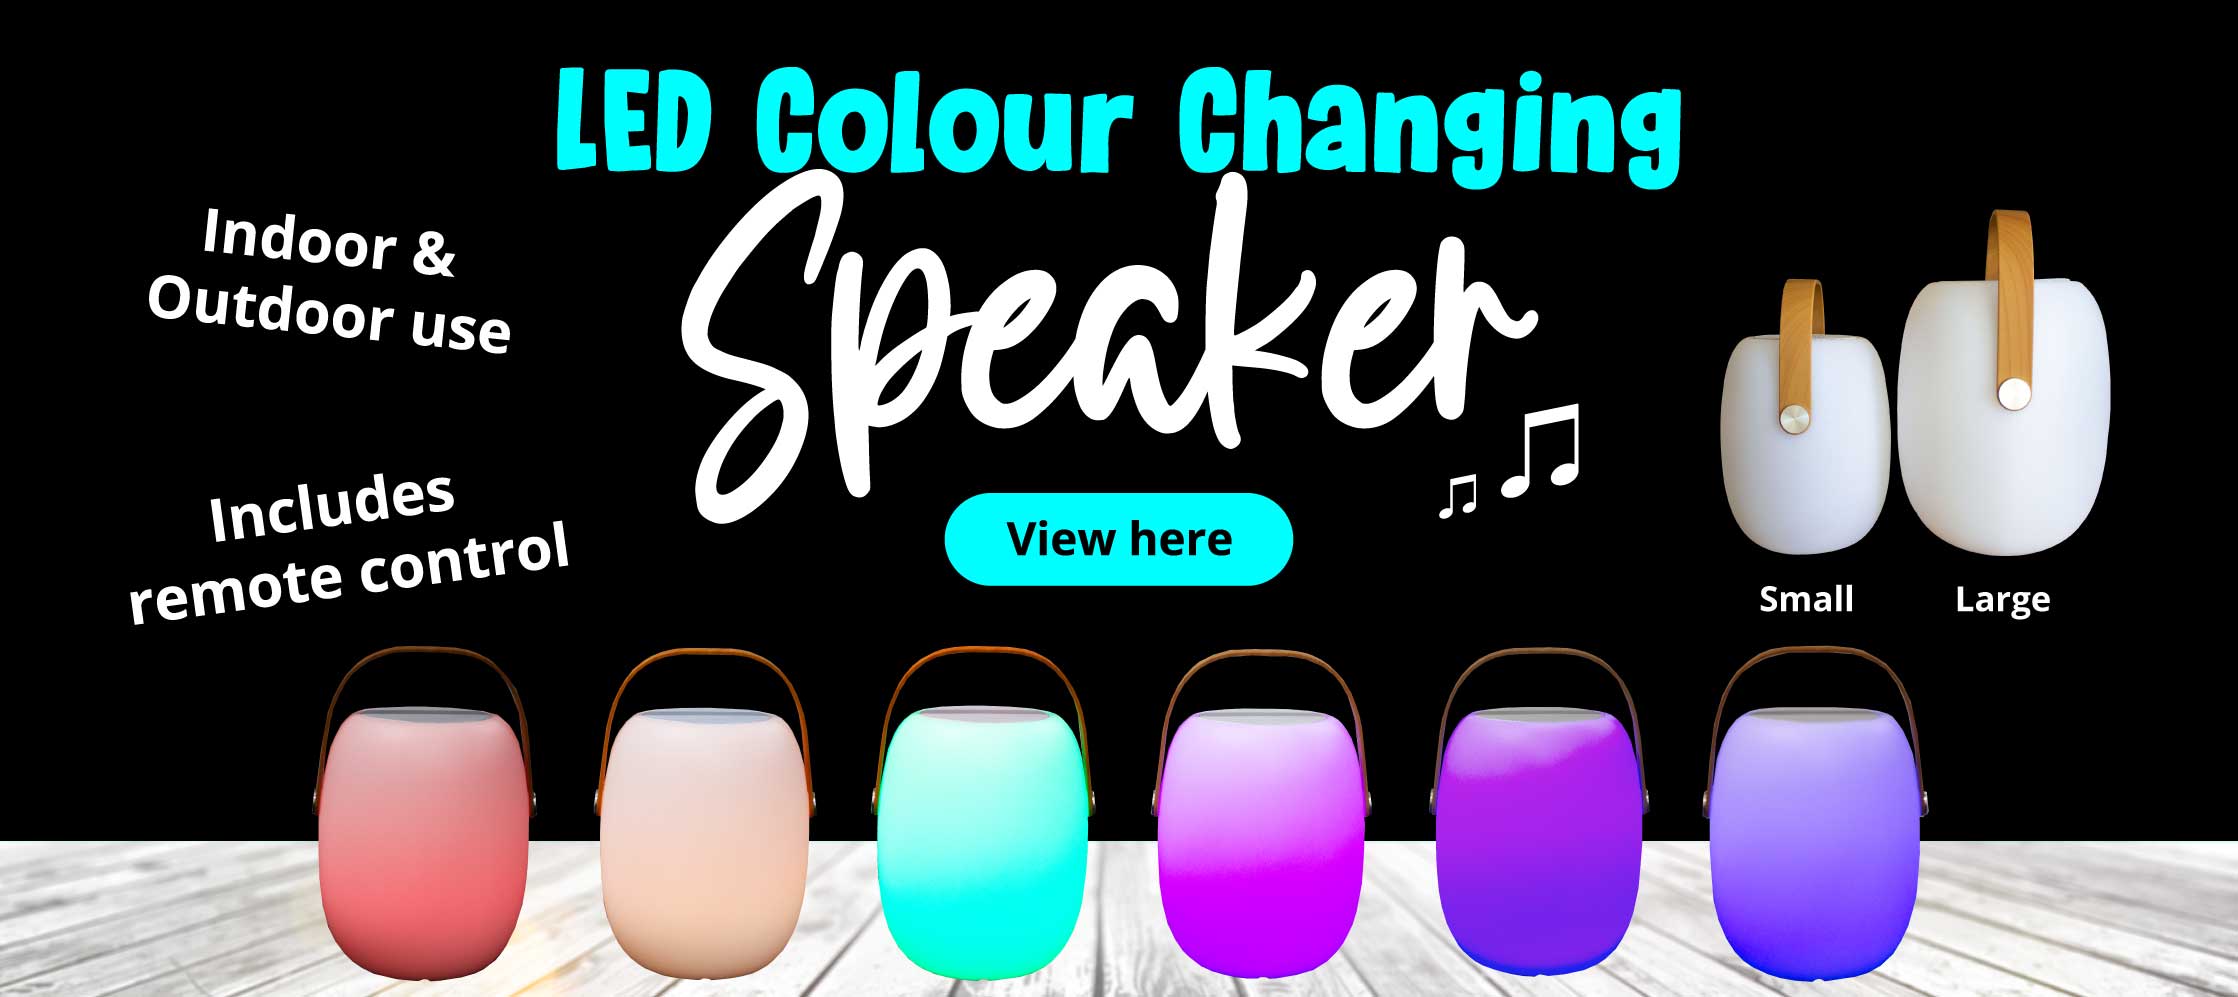 LED Colour Changing Speaker